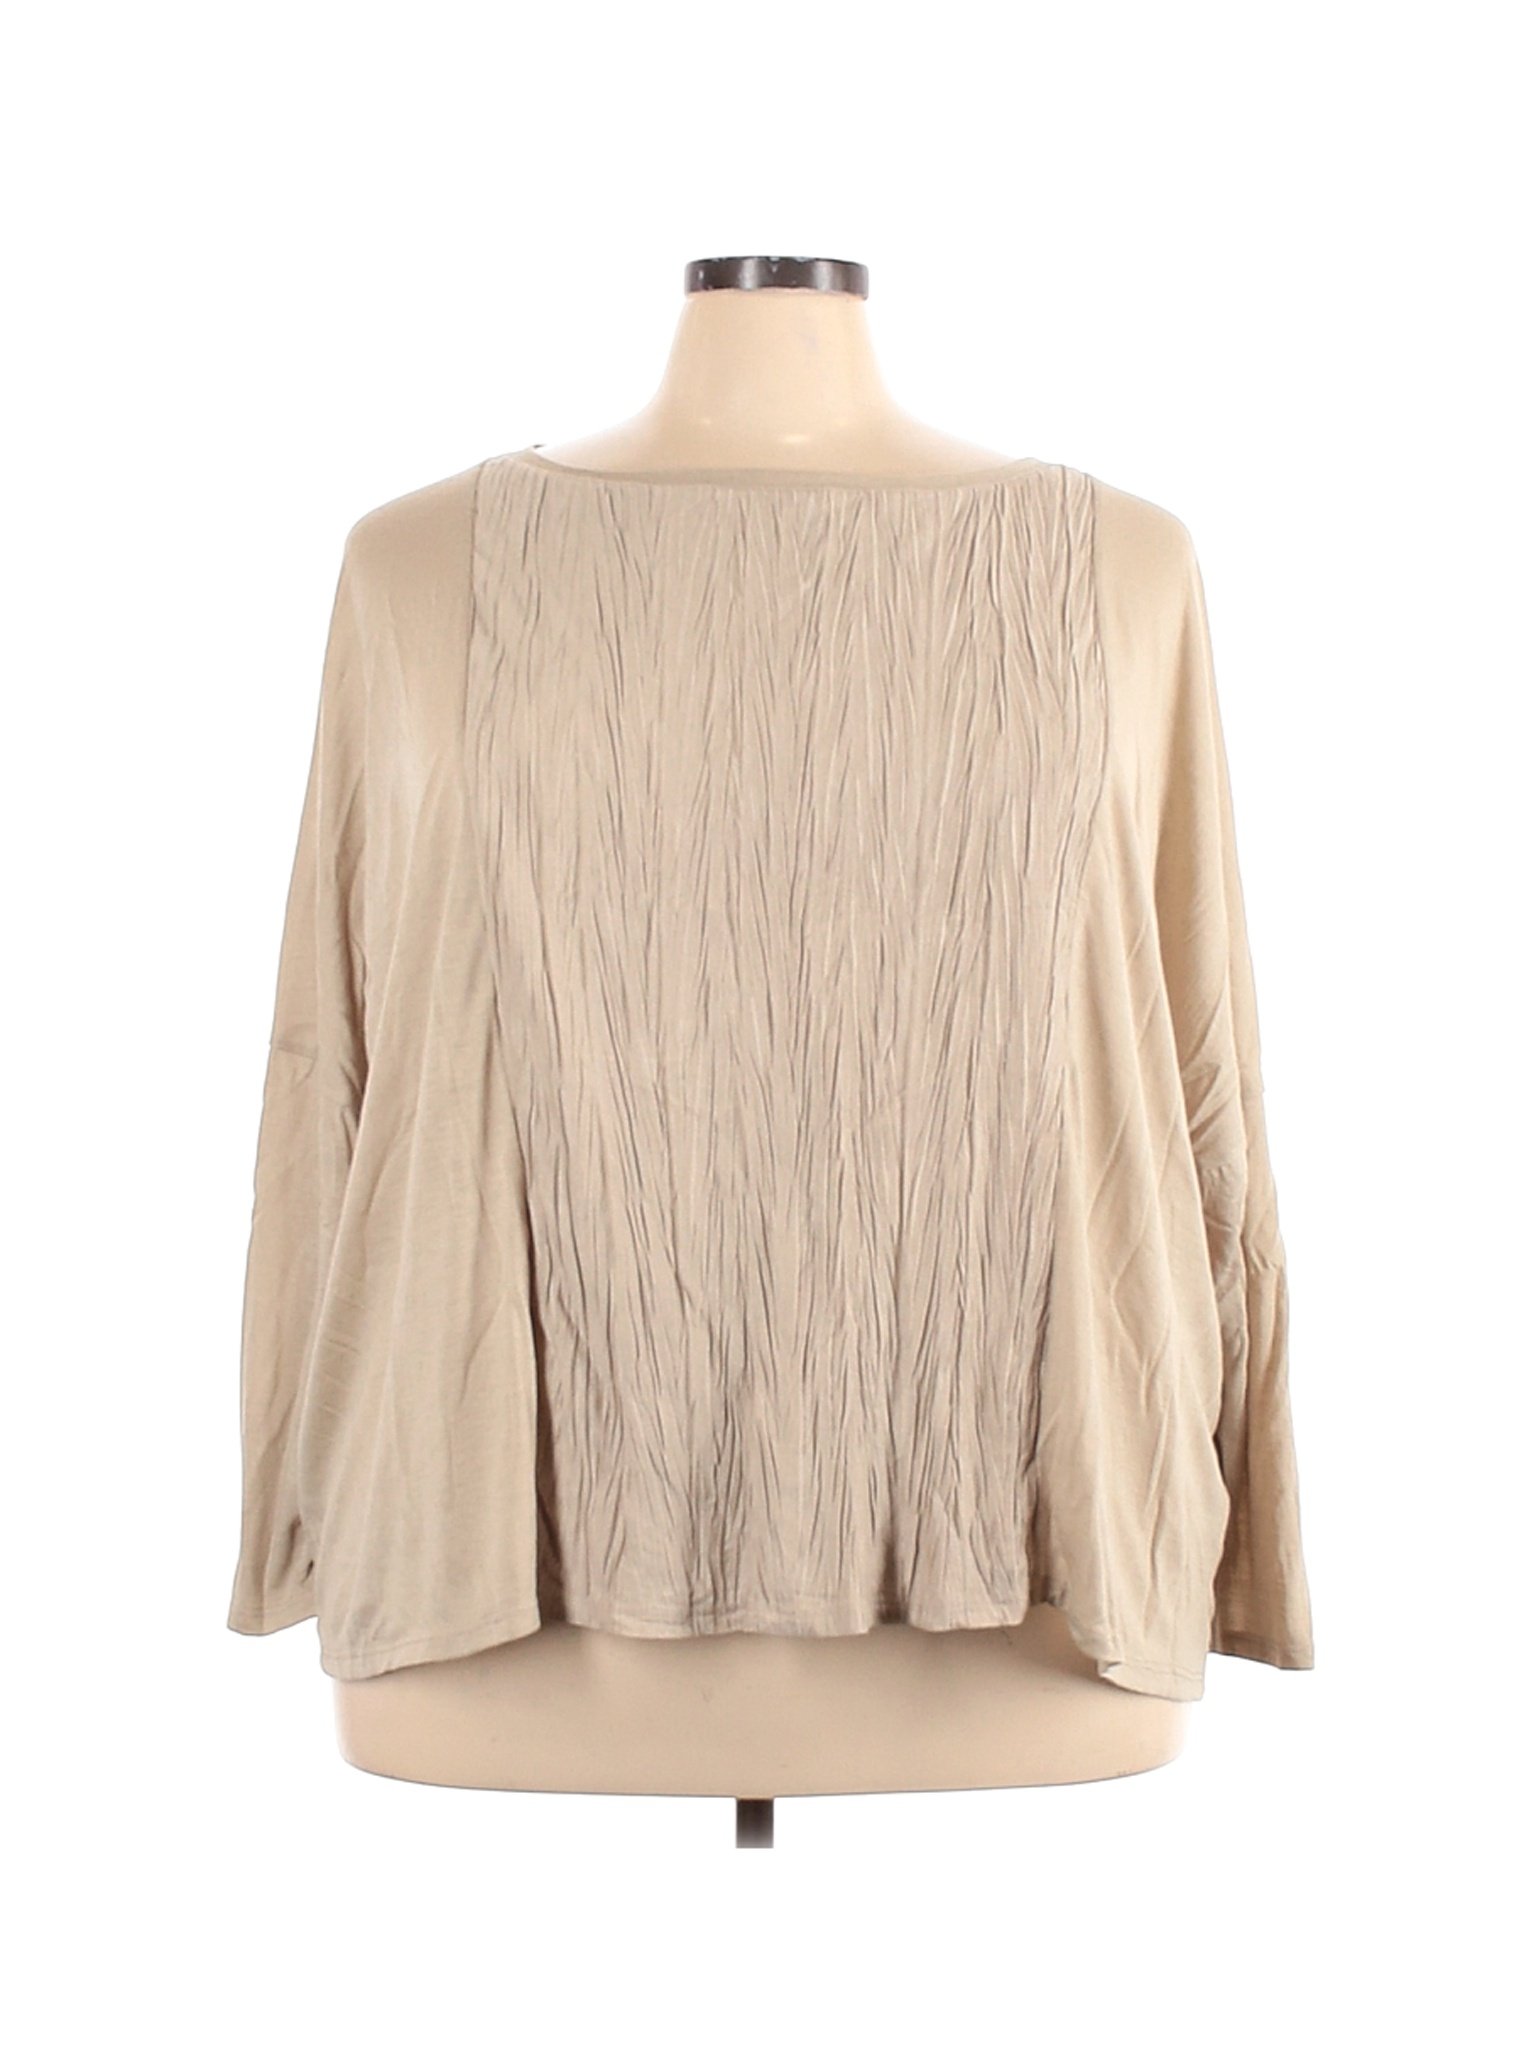 NWT Marla Wynne Women Brown Long Sleeve Top 3X Plus | eBay